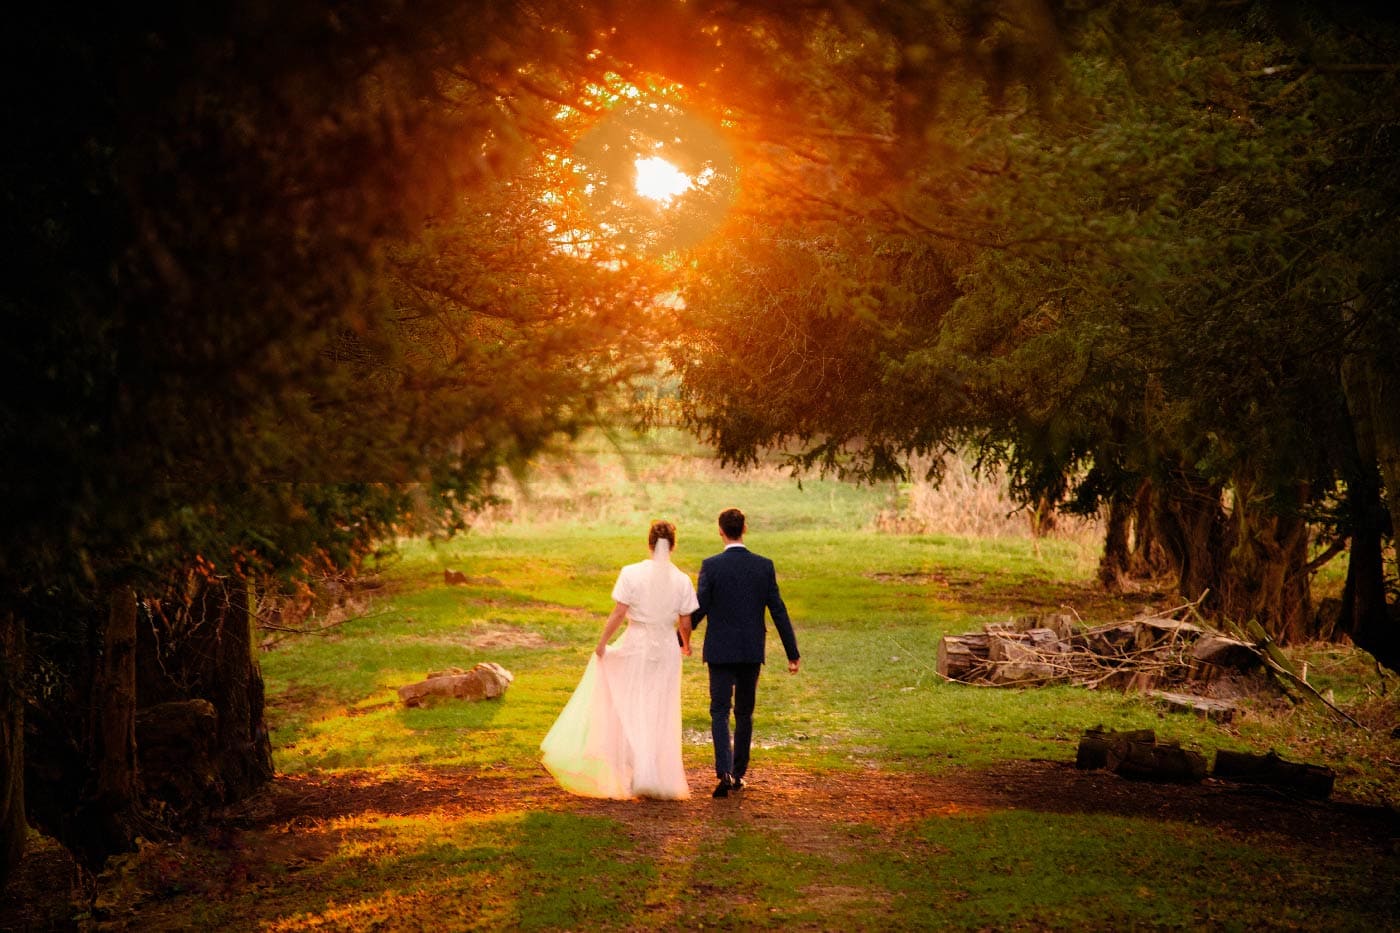 Bride and groom walking together during golden hour at Ettington Park